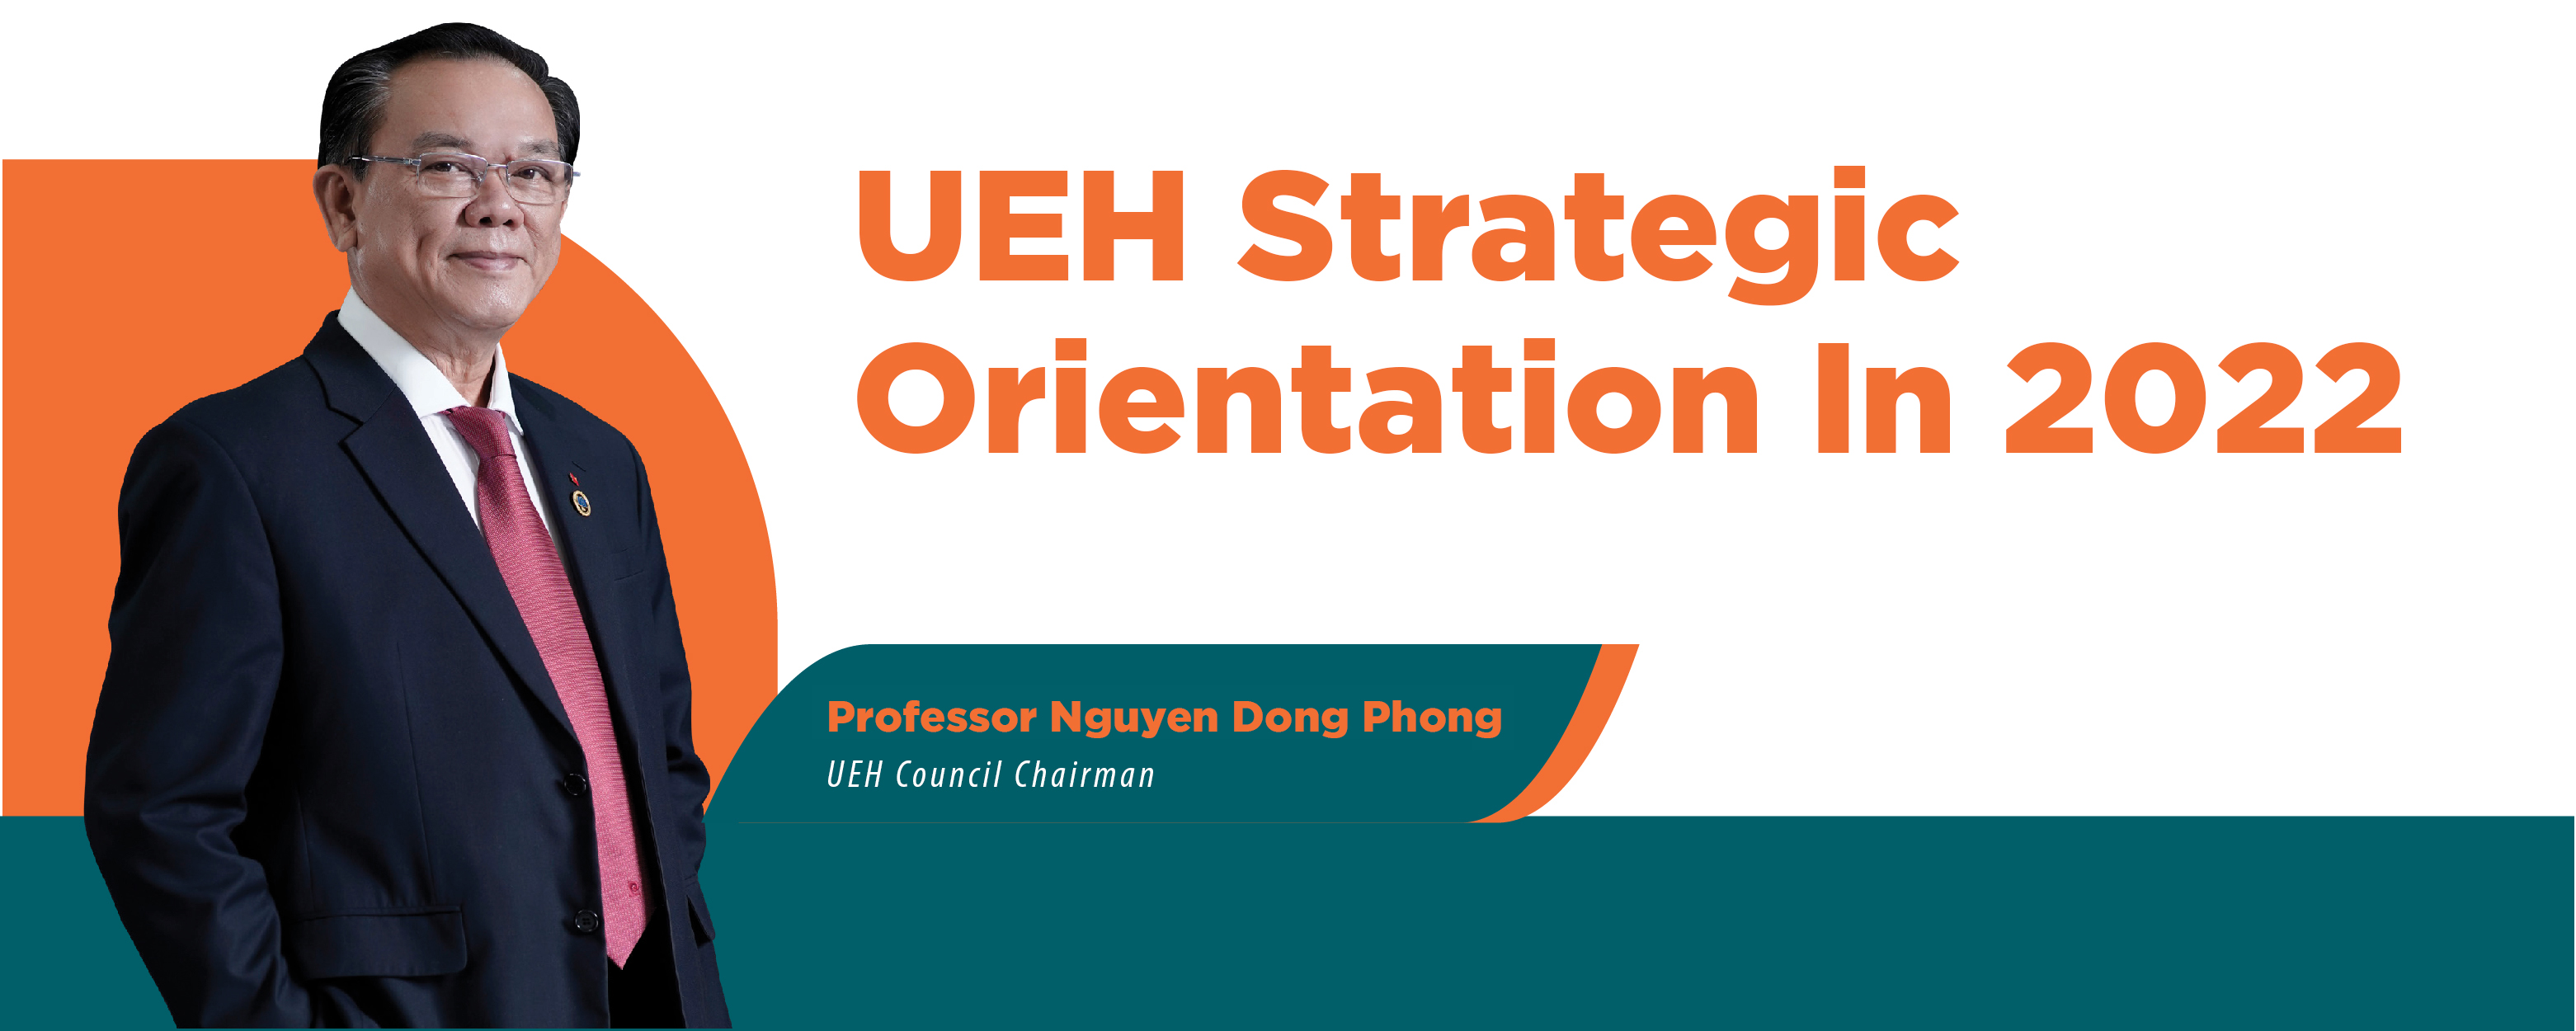 UEH Strategic Orientation in 2022